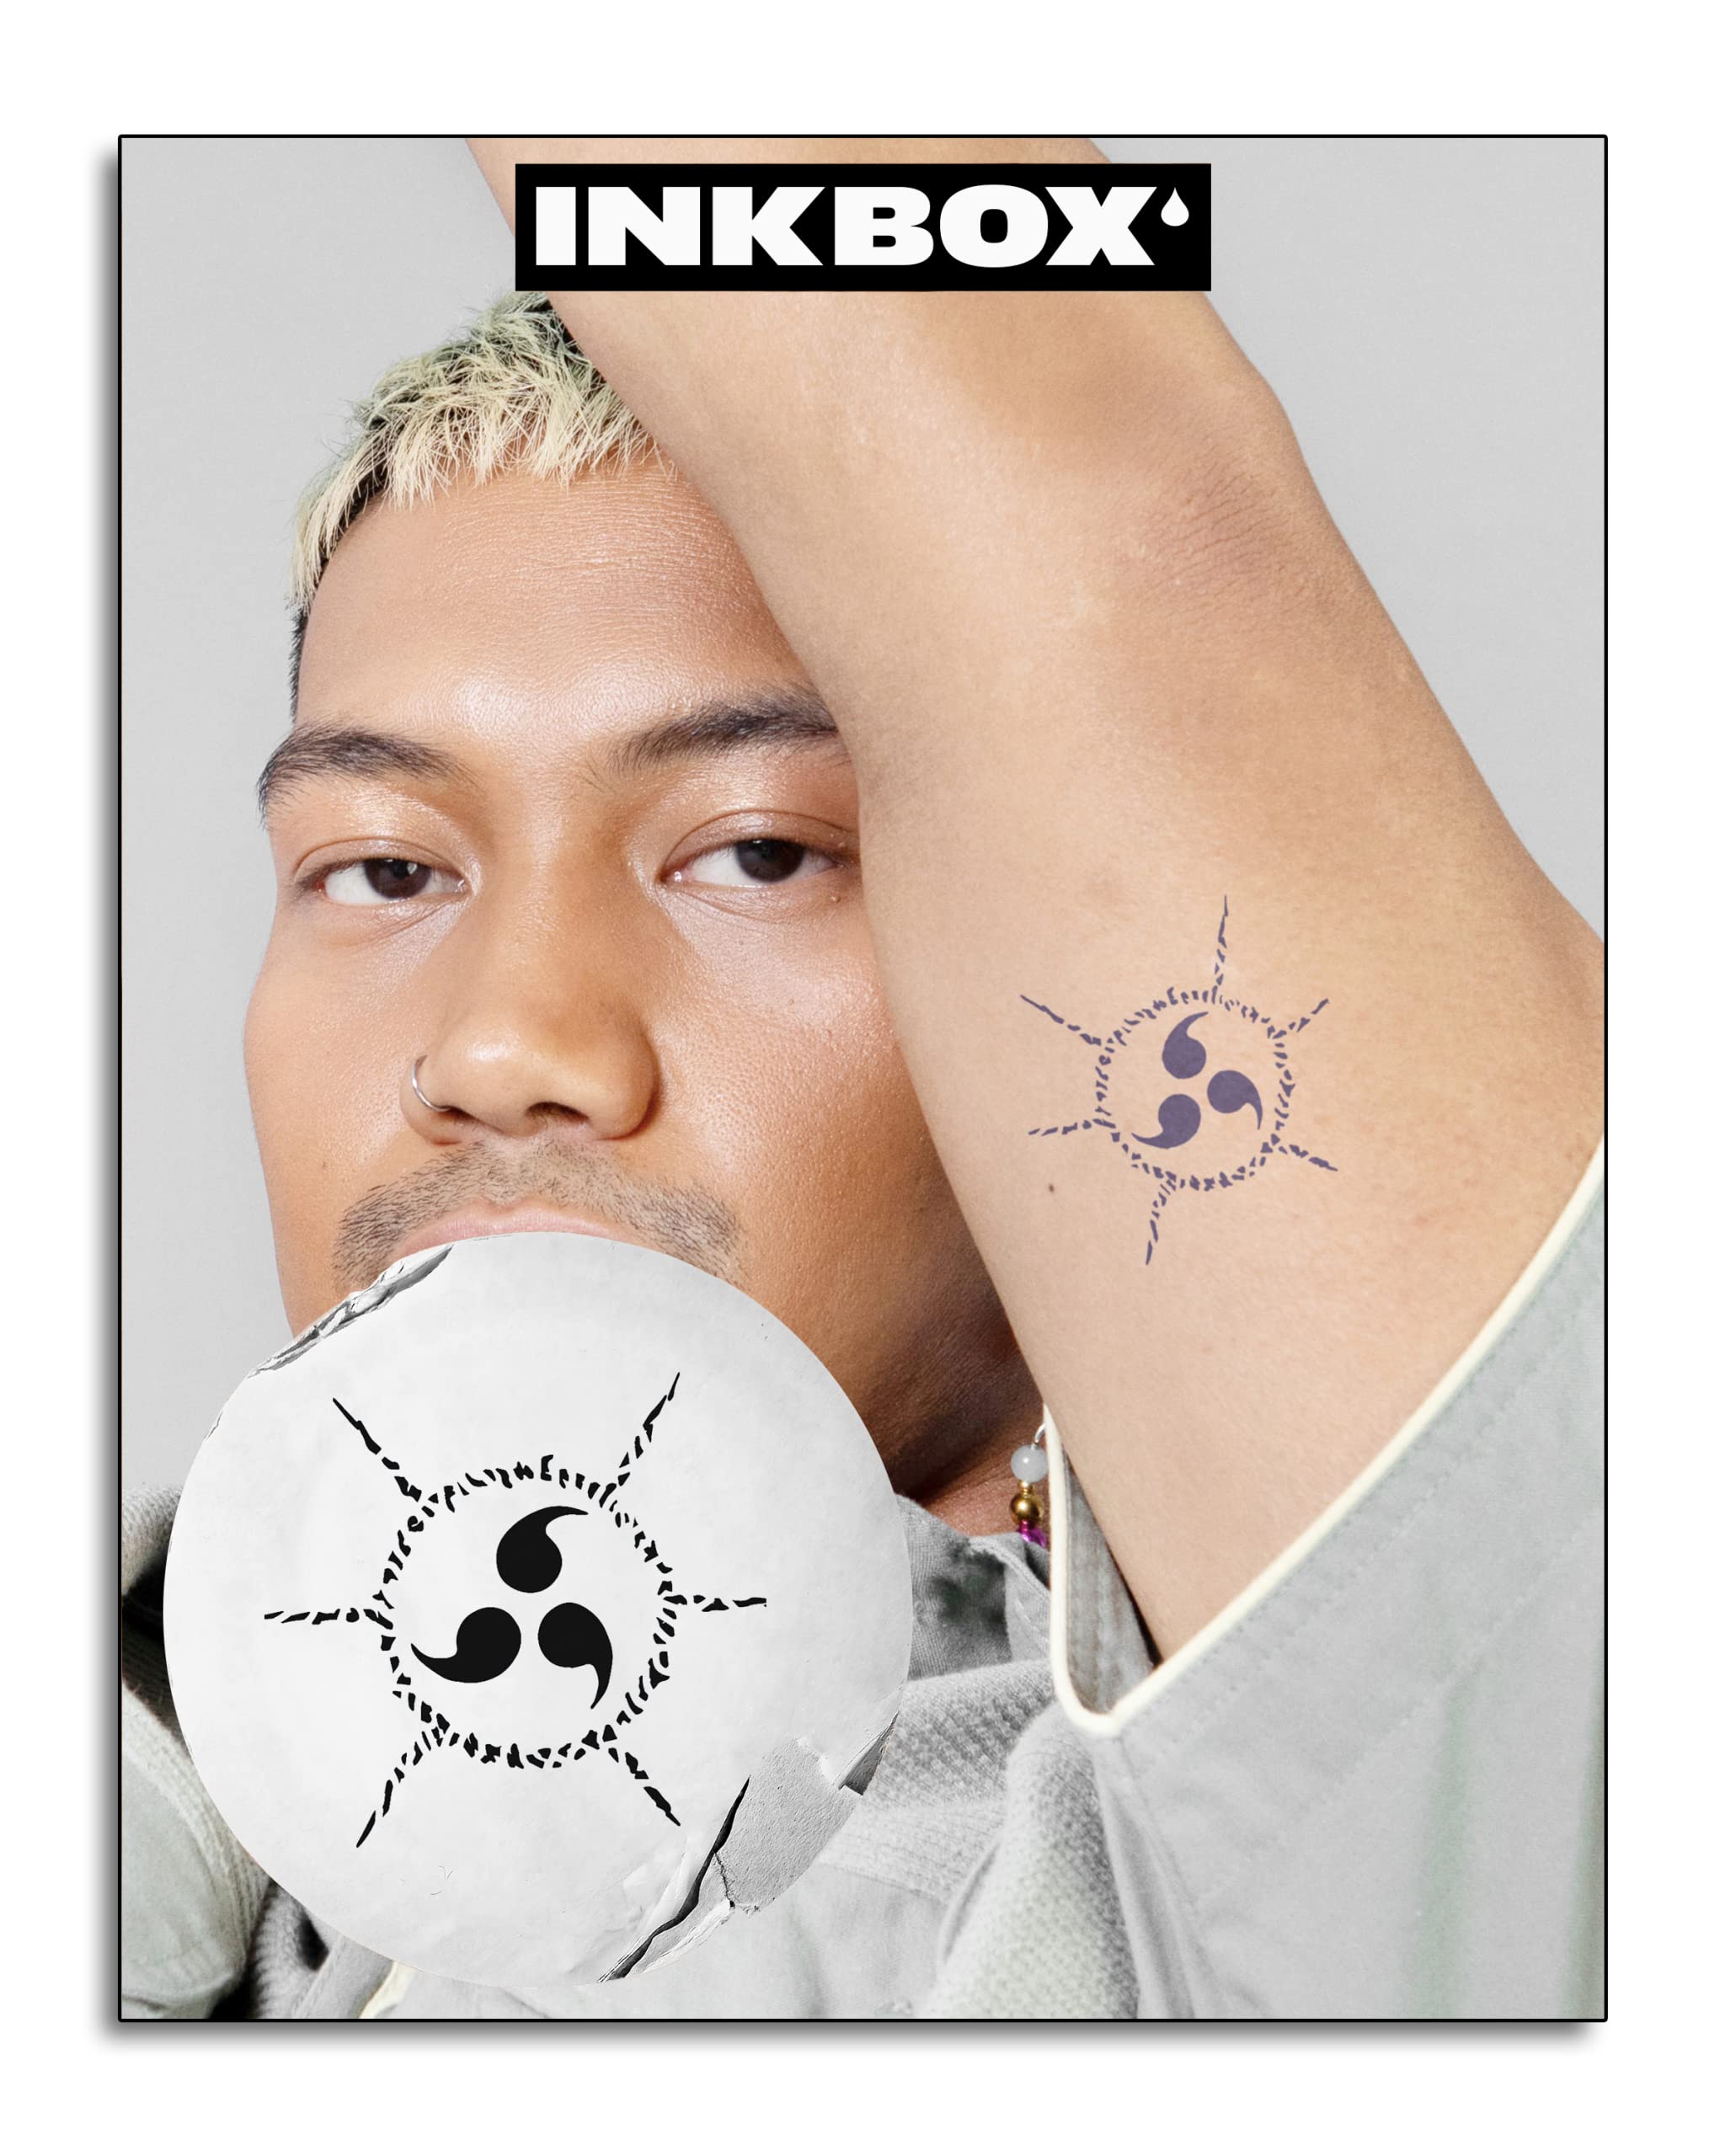 InkBox Steps Up to Help Tattoo Artists During Quarantine